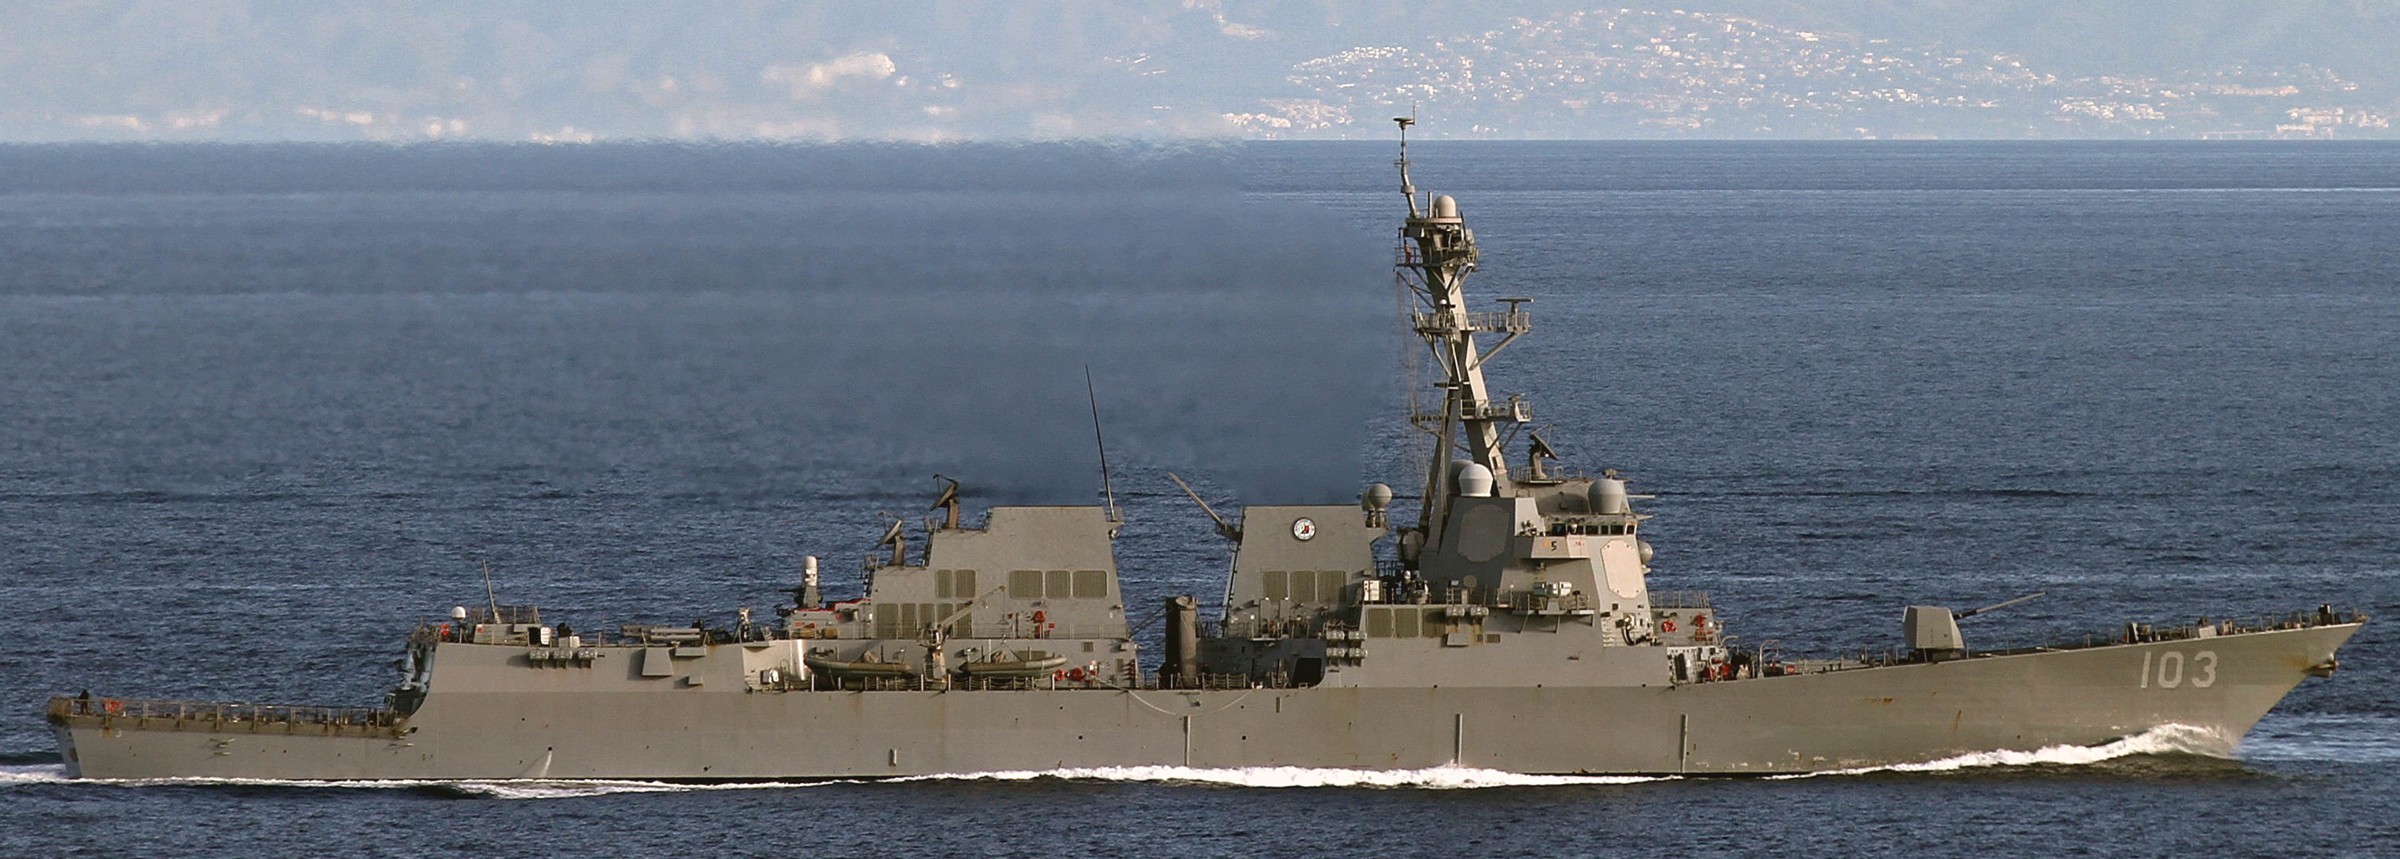 ddg-103 uss truxtun arleigh burke class guided missile destroyer aegis us navy strait of gibraltar 49